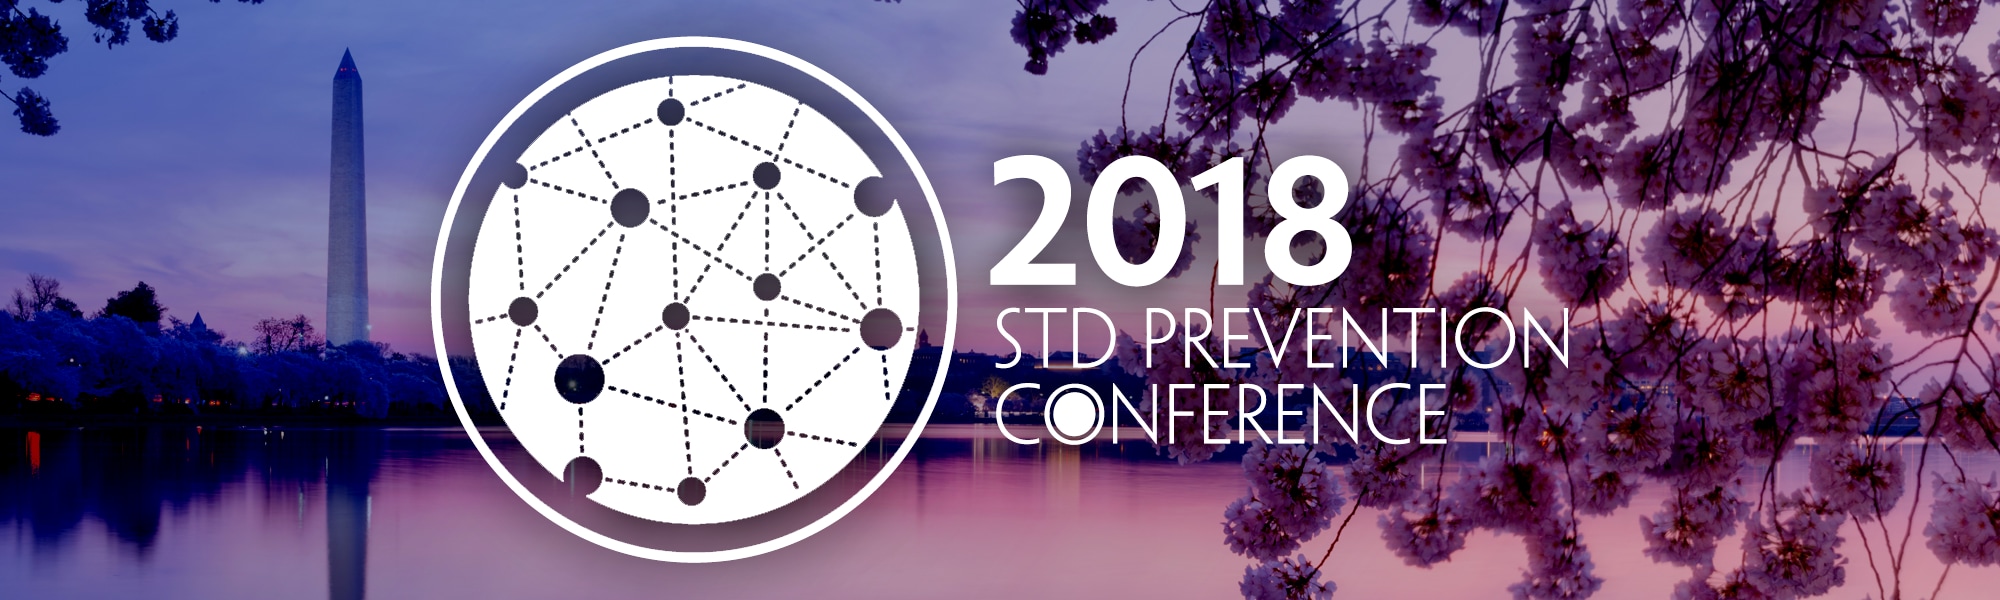 STD Prevention Conference